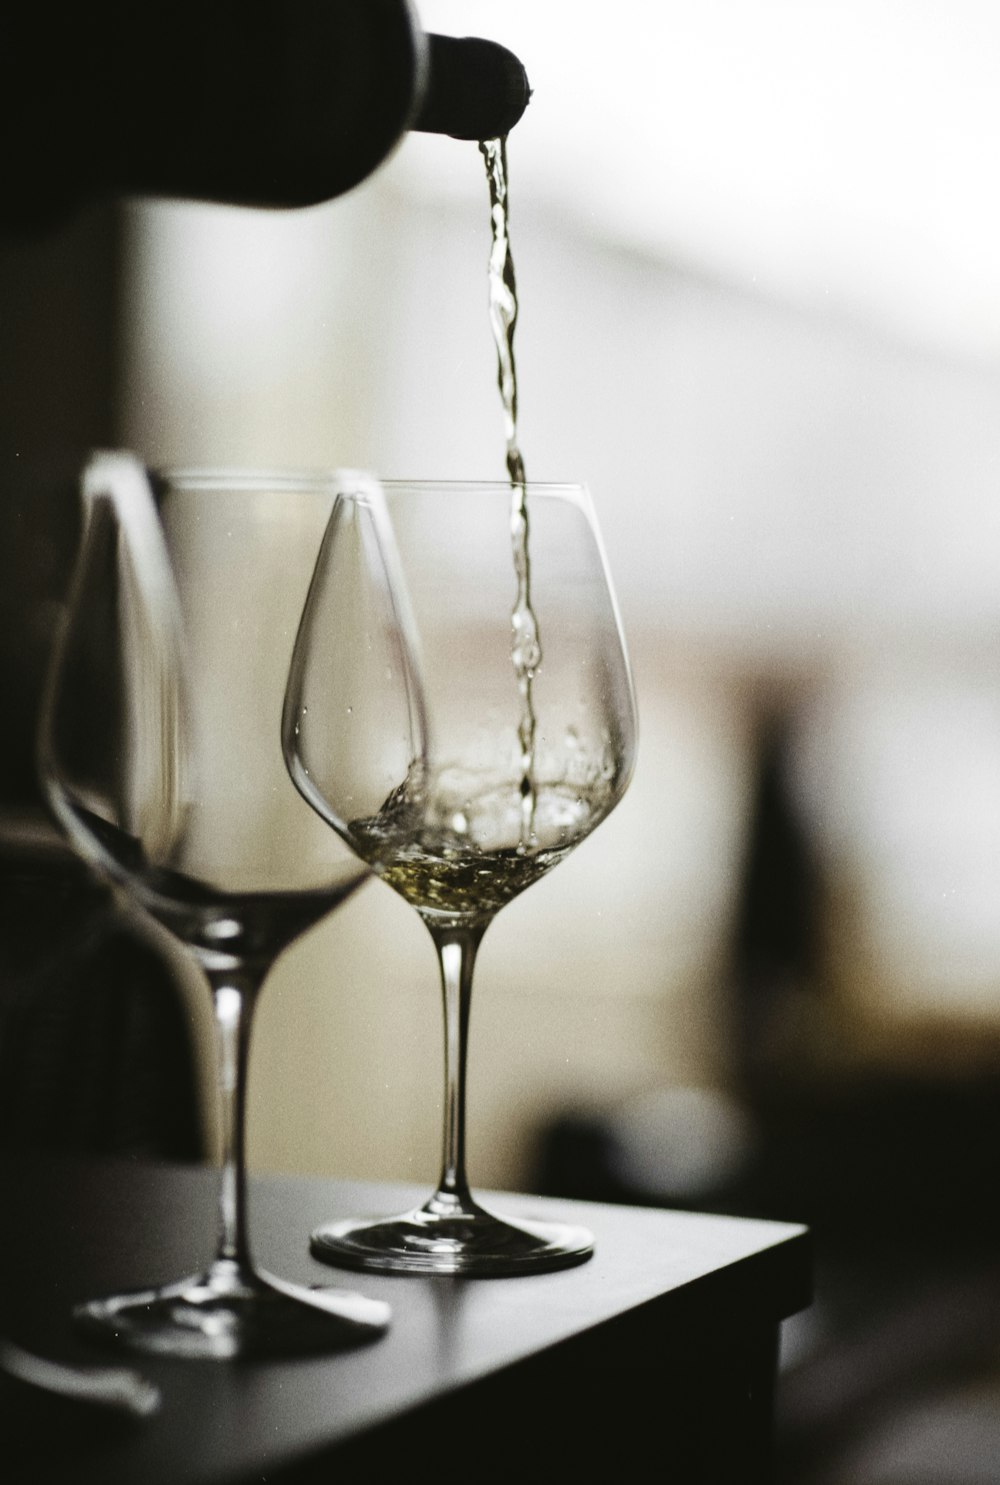 a person pouring wine into a wine glass